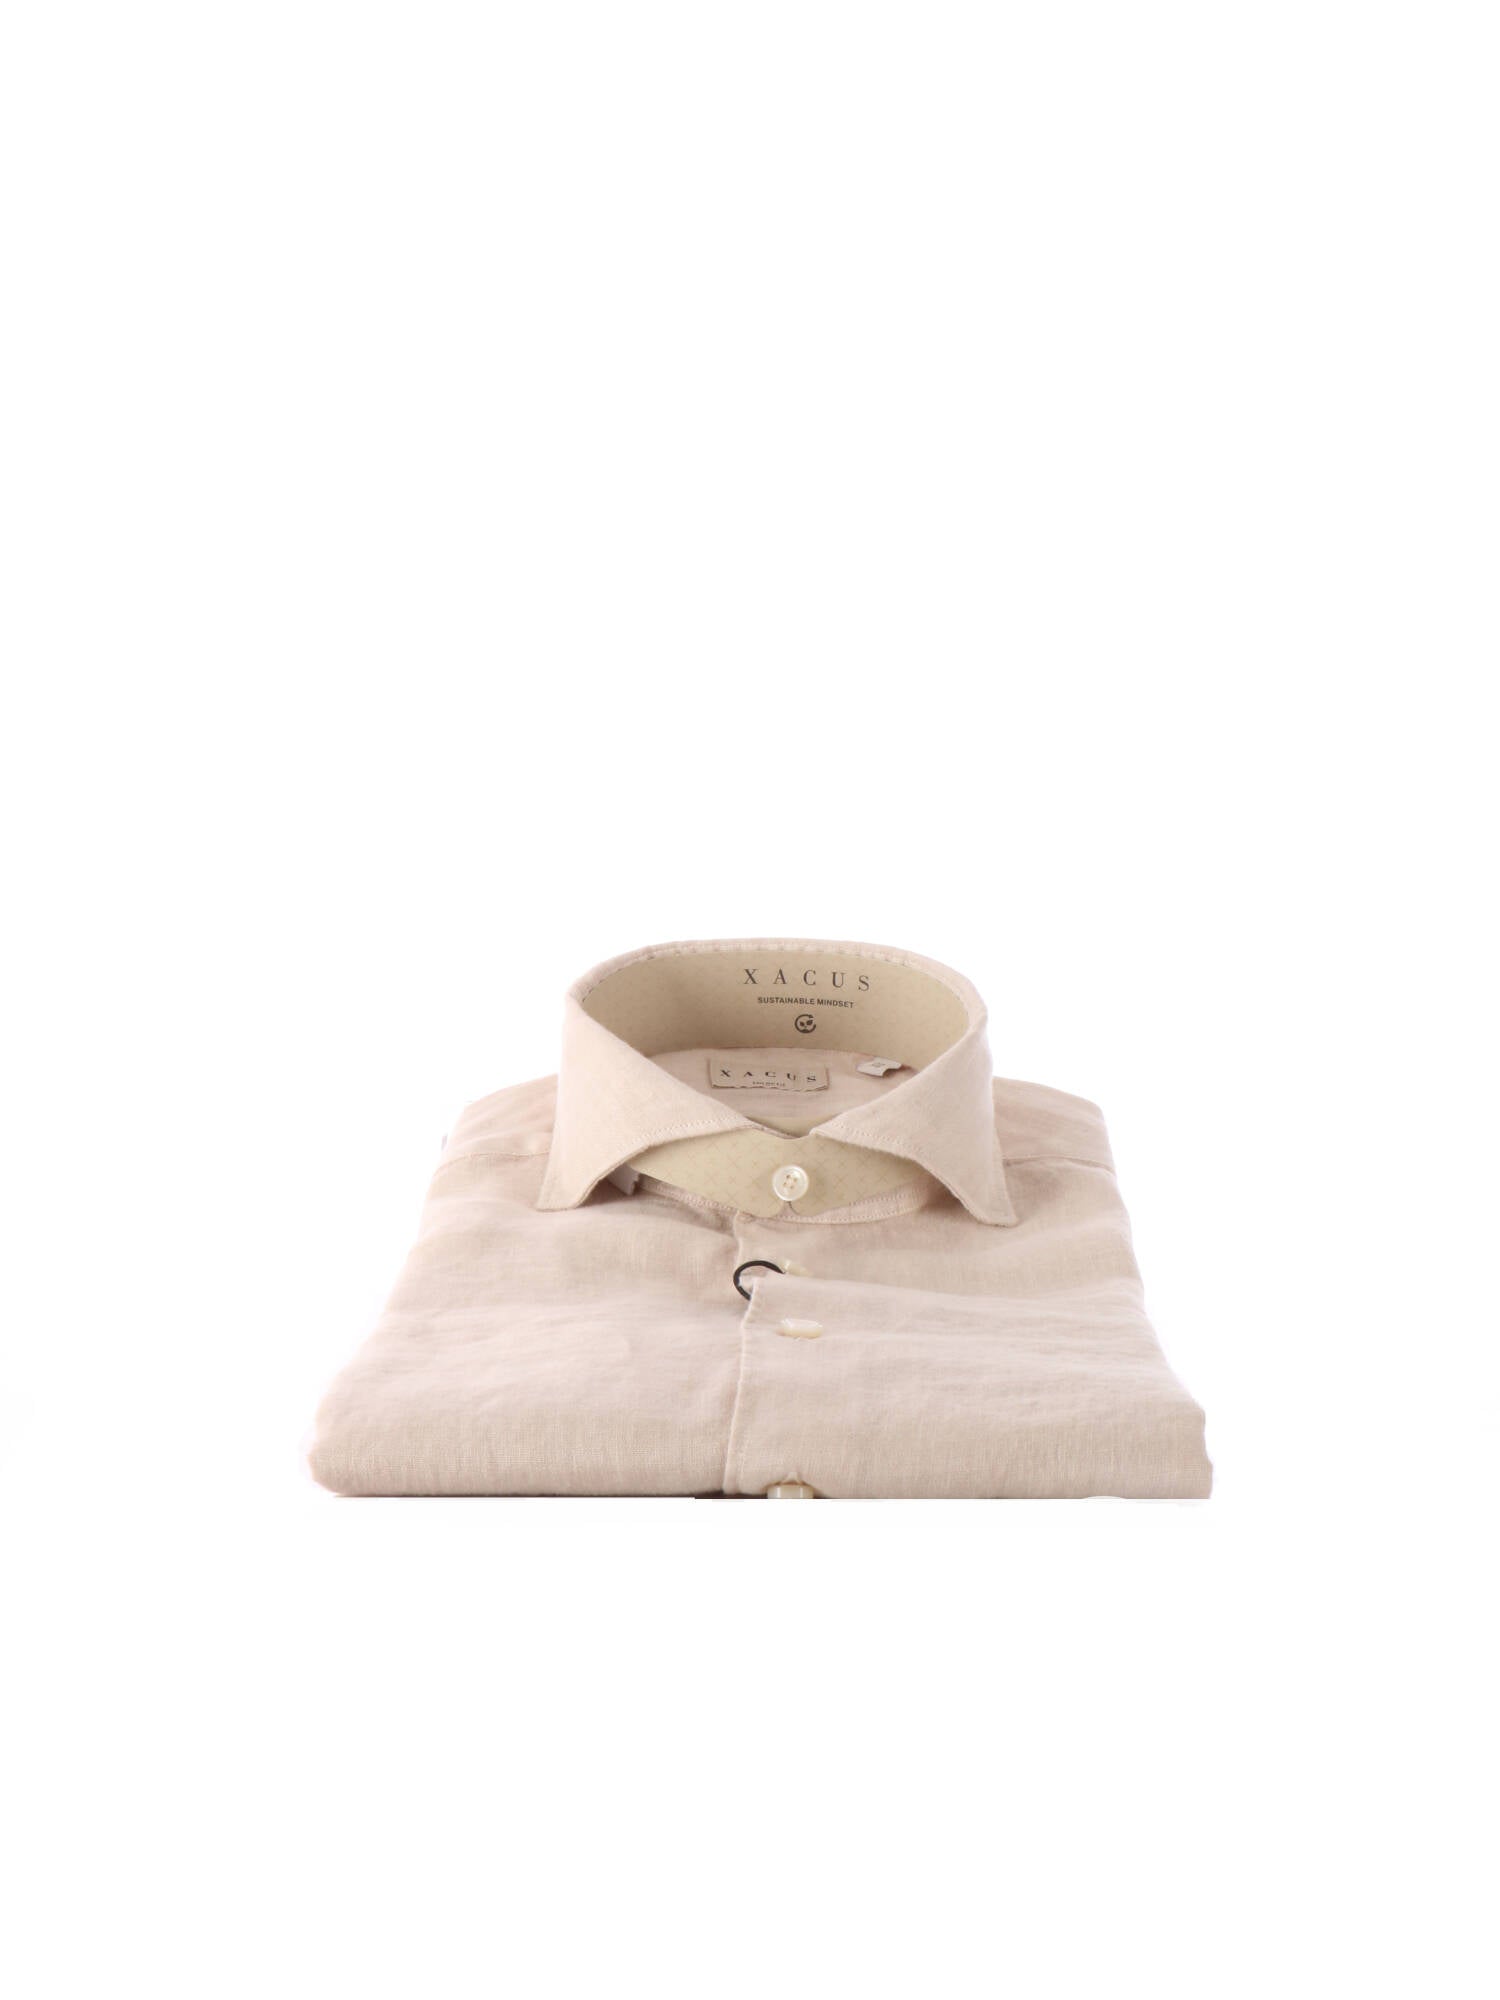 Xacus camicia beige in lino